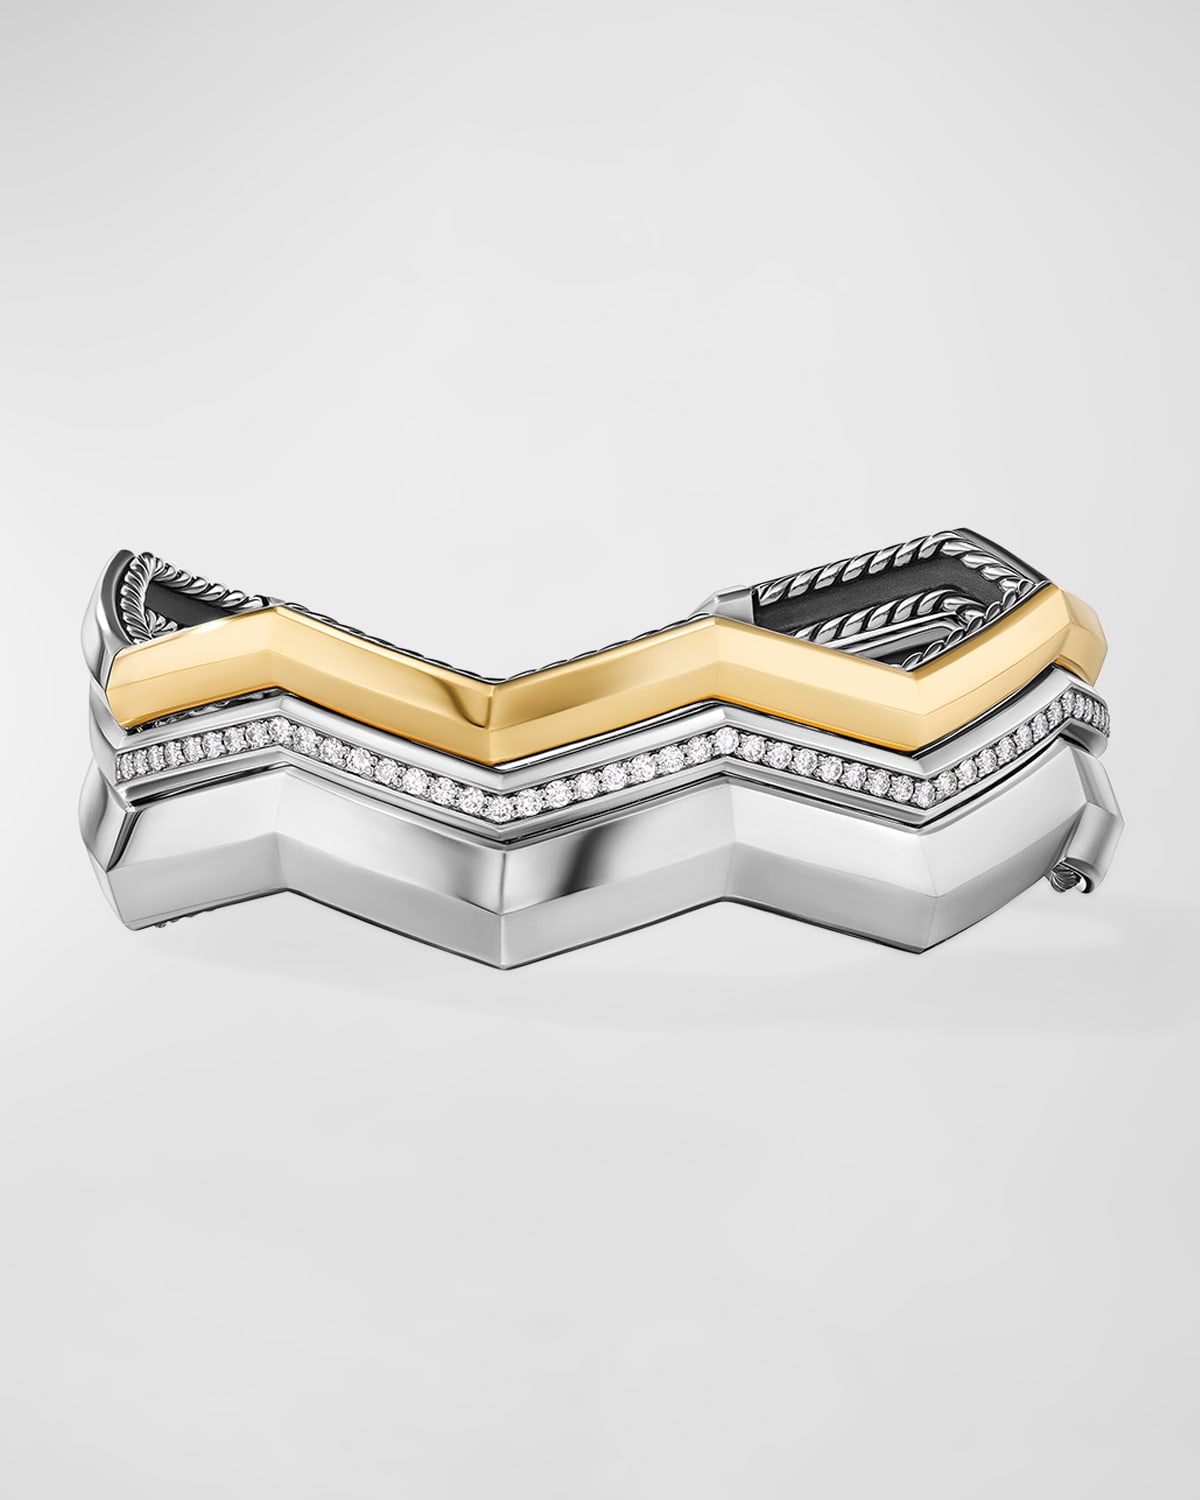 David Yurman Zig Zag Stax Three Row Cuff Bracelet With Diamonds In 18k Gold And Silver, 17mm In Adi